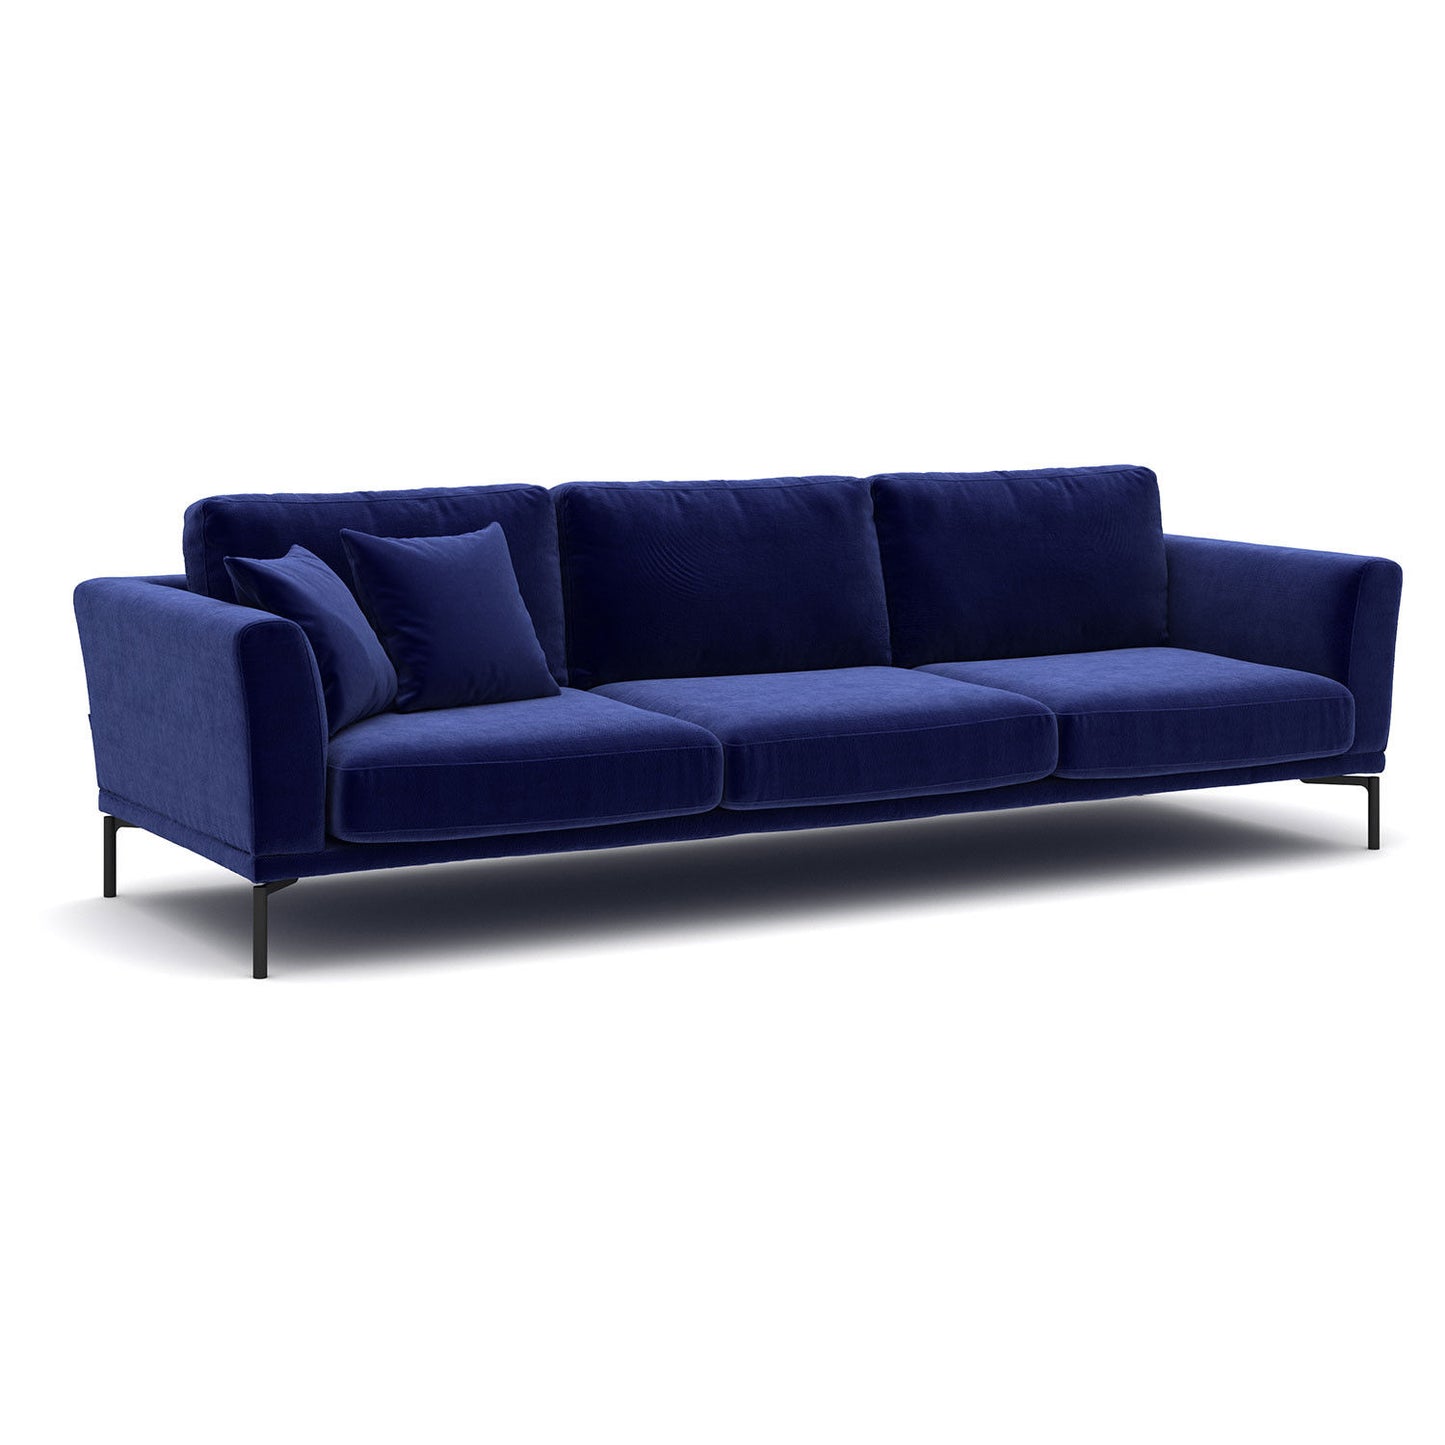 Jade - 4-sæders sofa